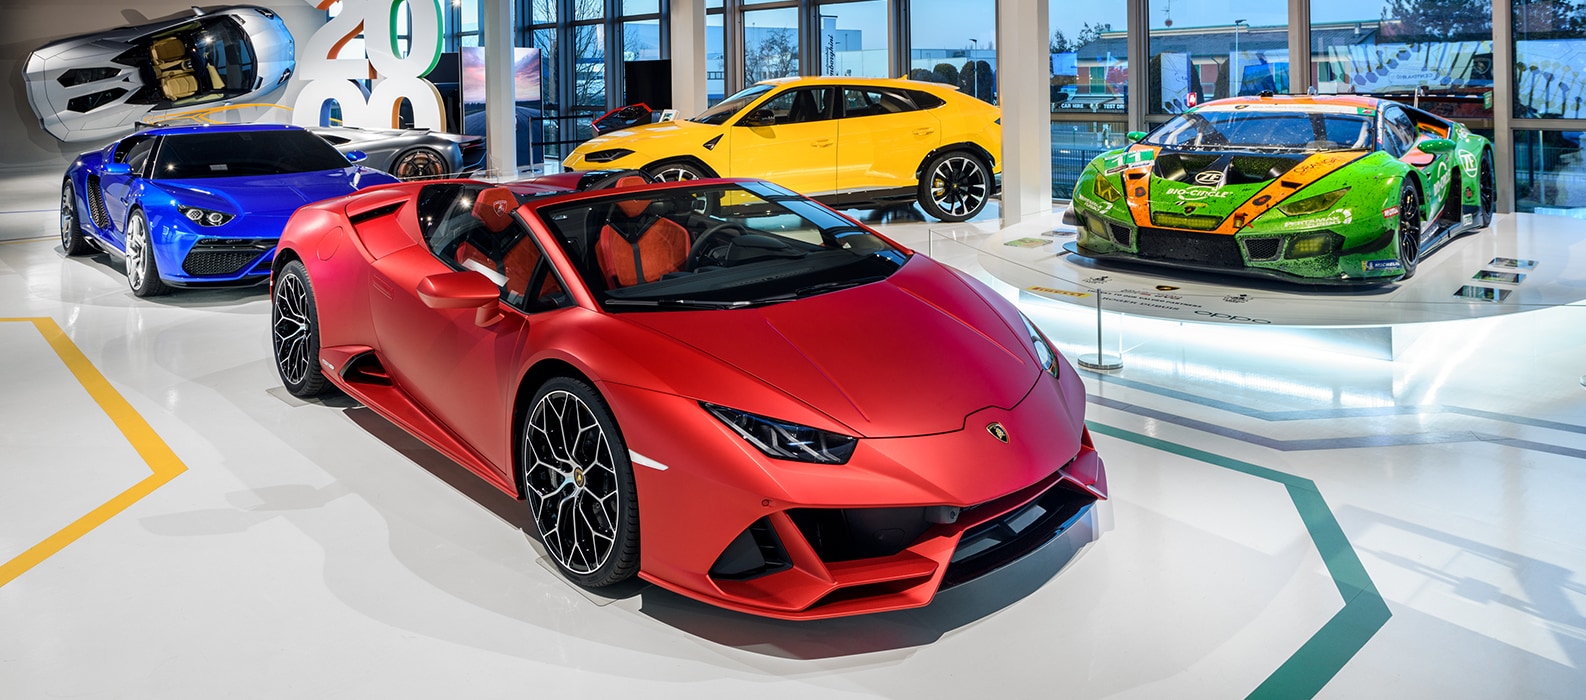 Take a selfie true to a real Lamborghini lover!